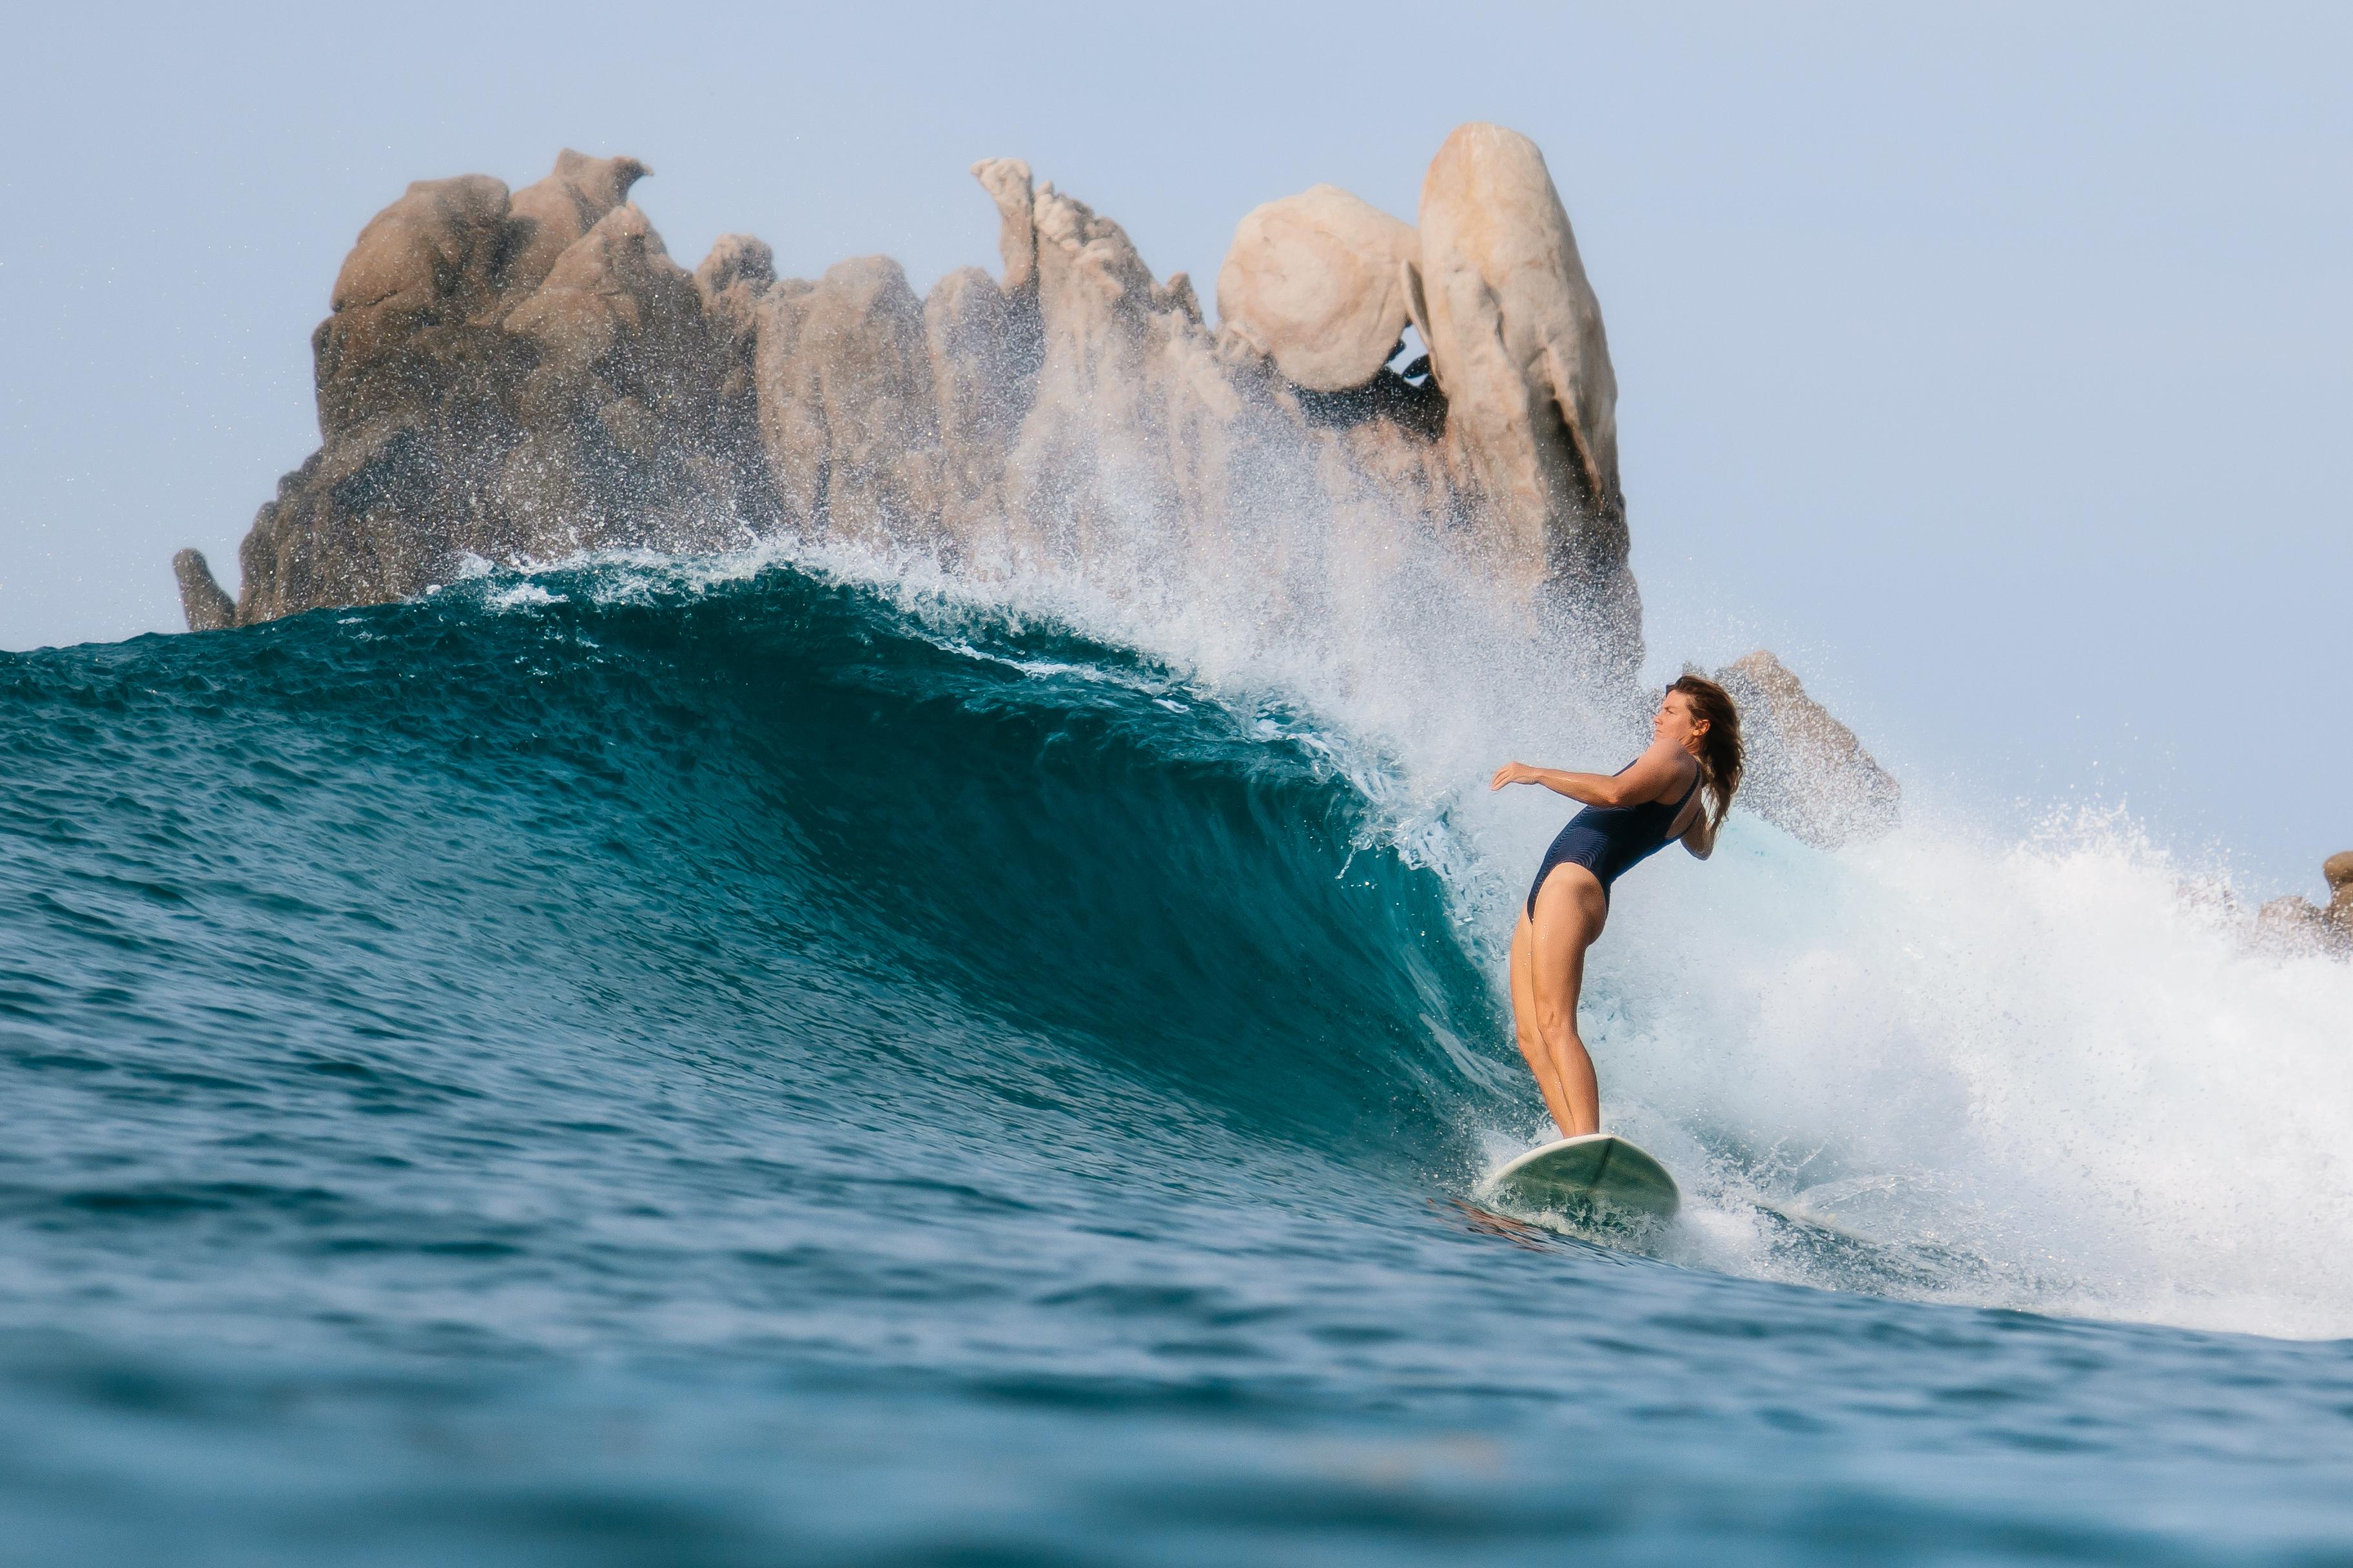 women surfing Mexico surf trip spring break respectful tourism